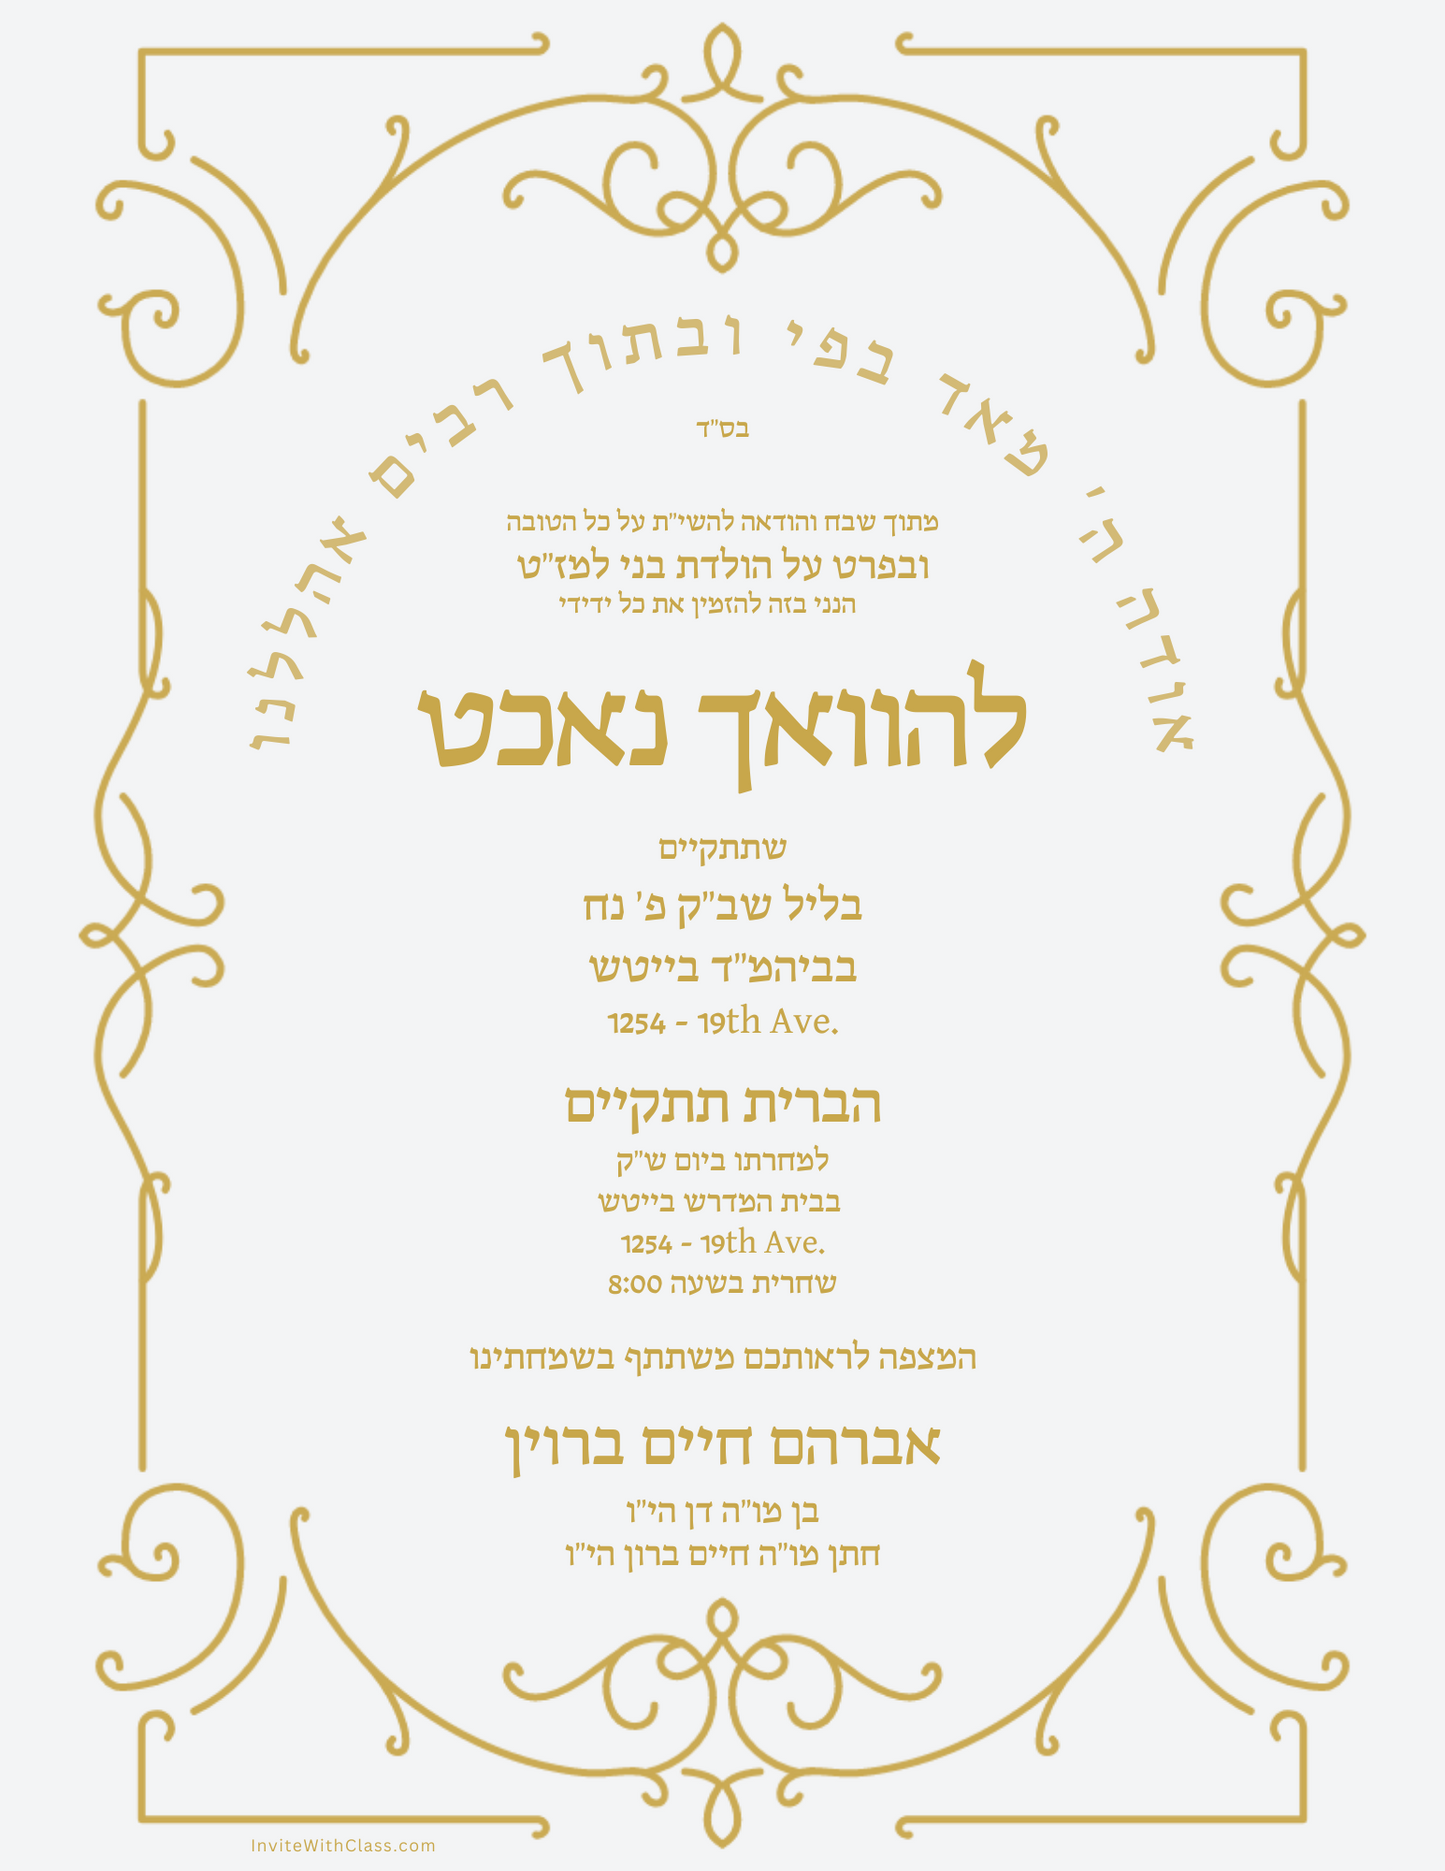 Vac Nacht invitation with gold border